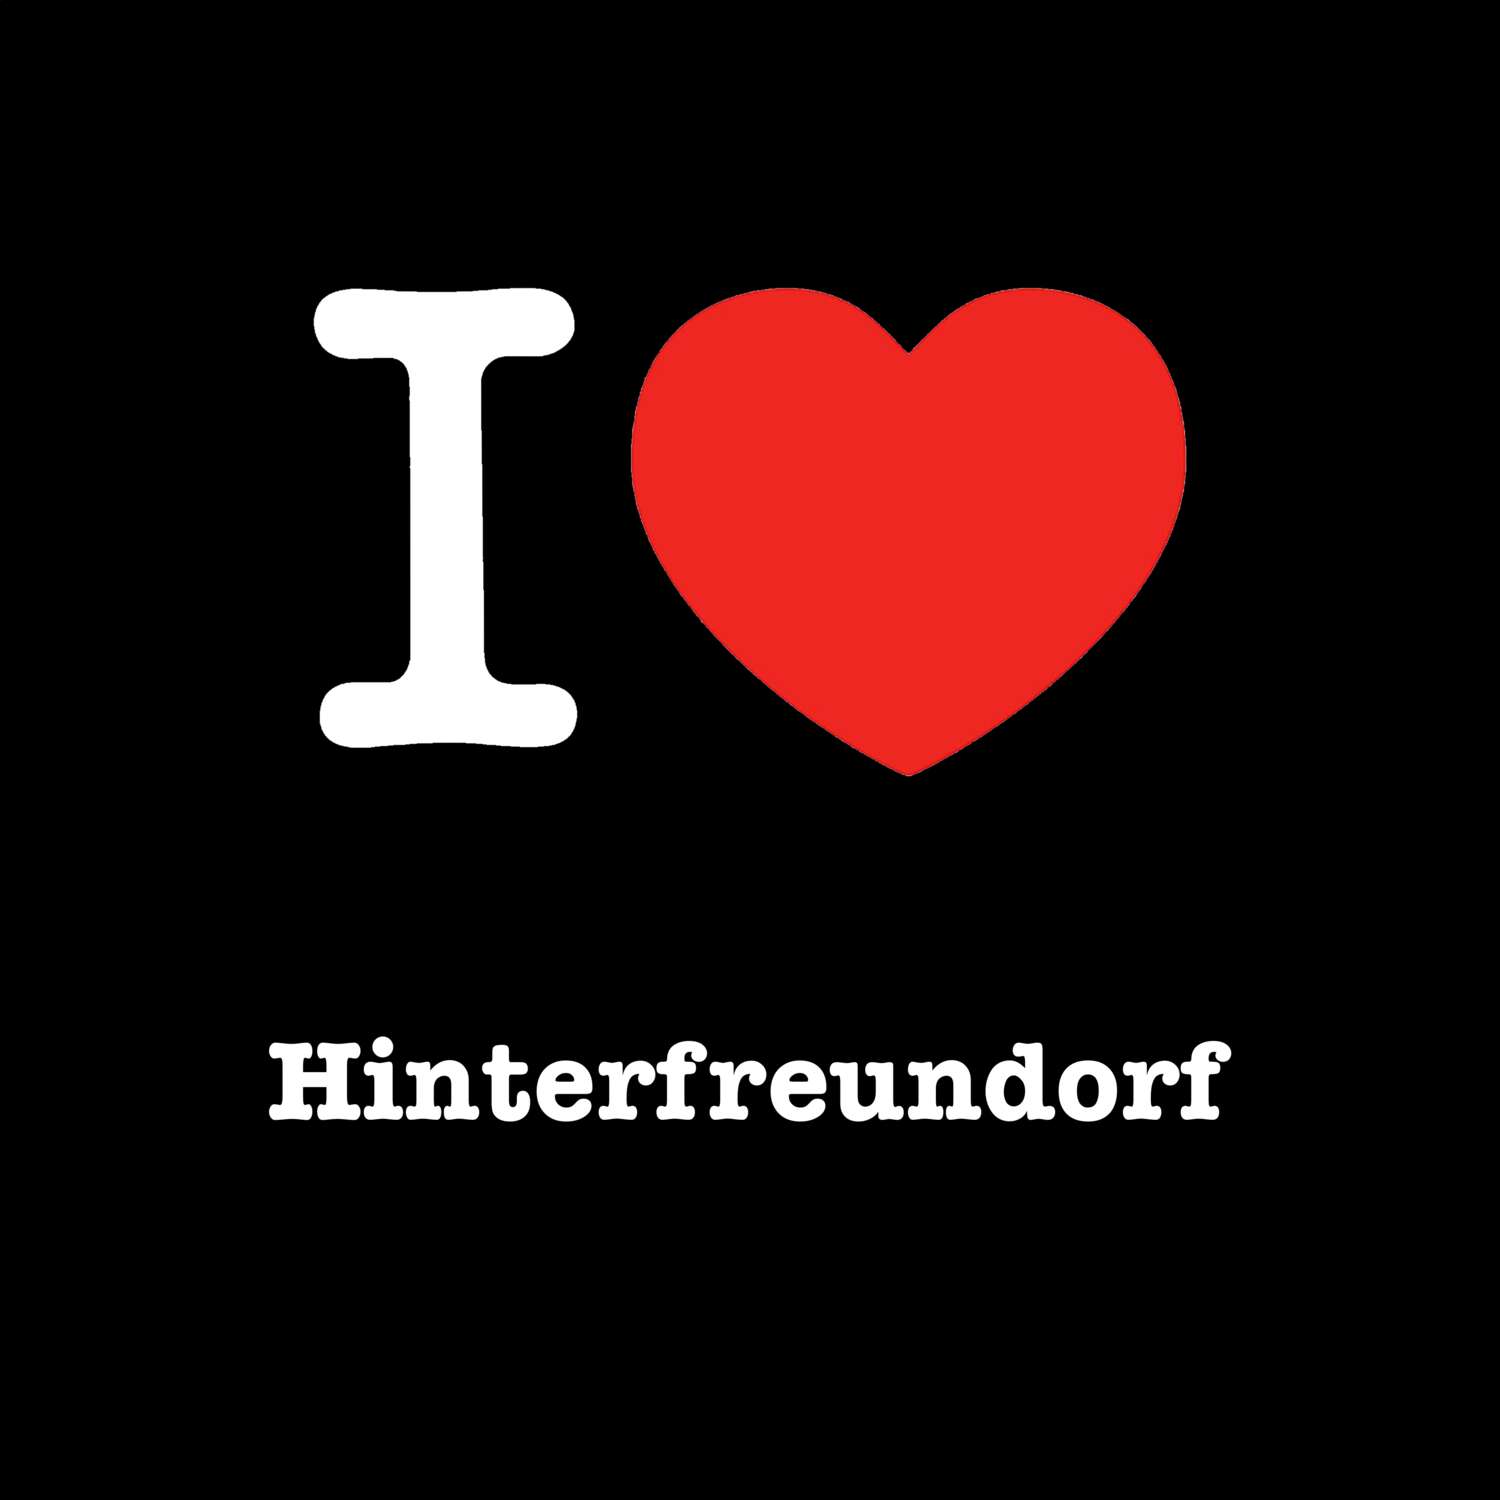 Hinterfreundorf T-Shirt »I love«